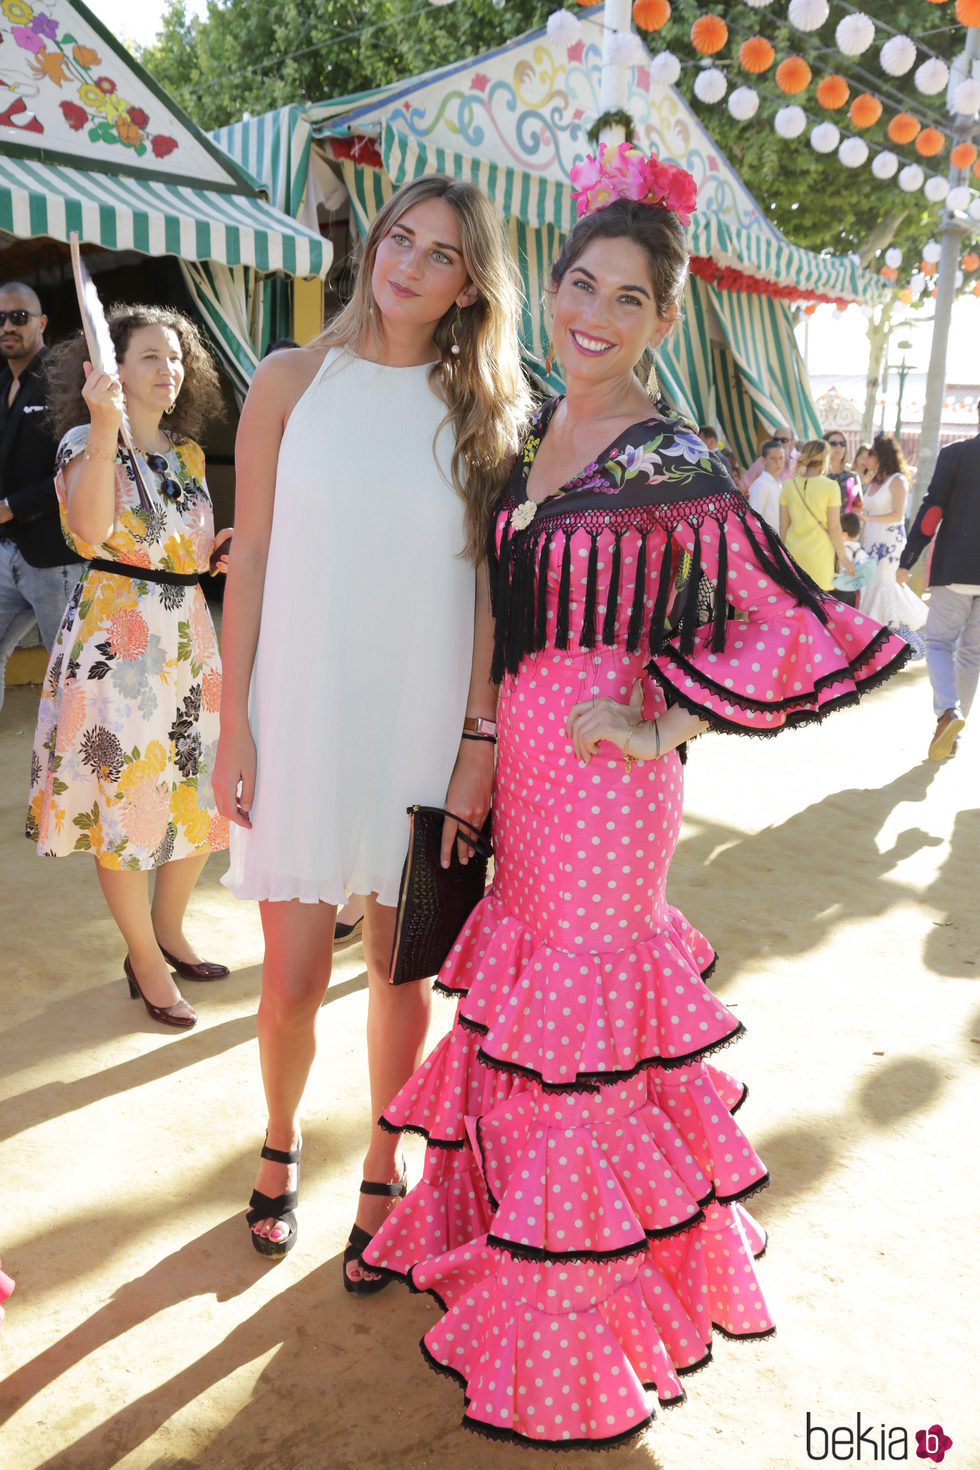 Sibi y Lourdes Montes en la Feria de Abril 2017